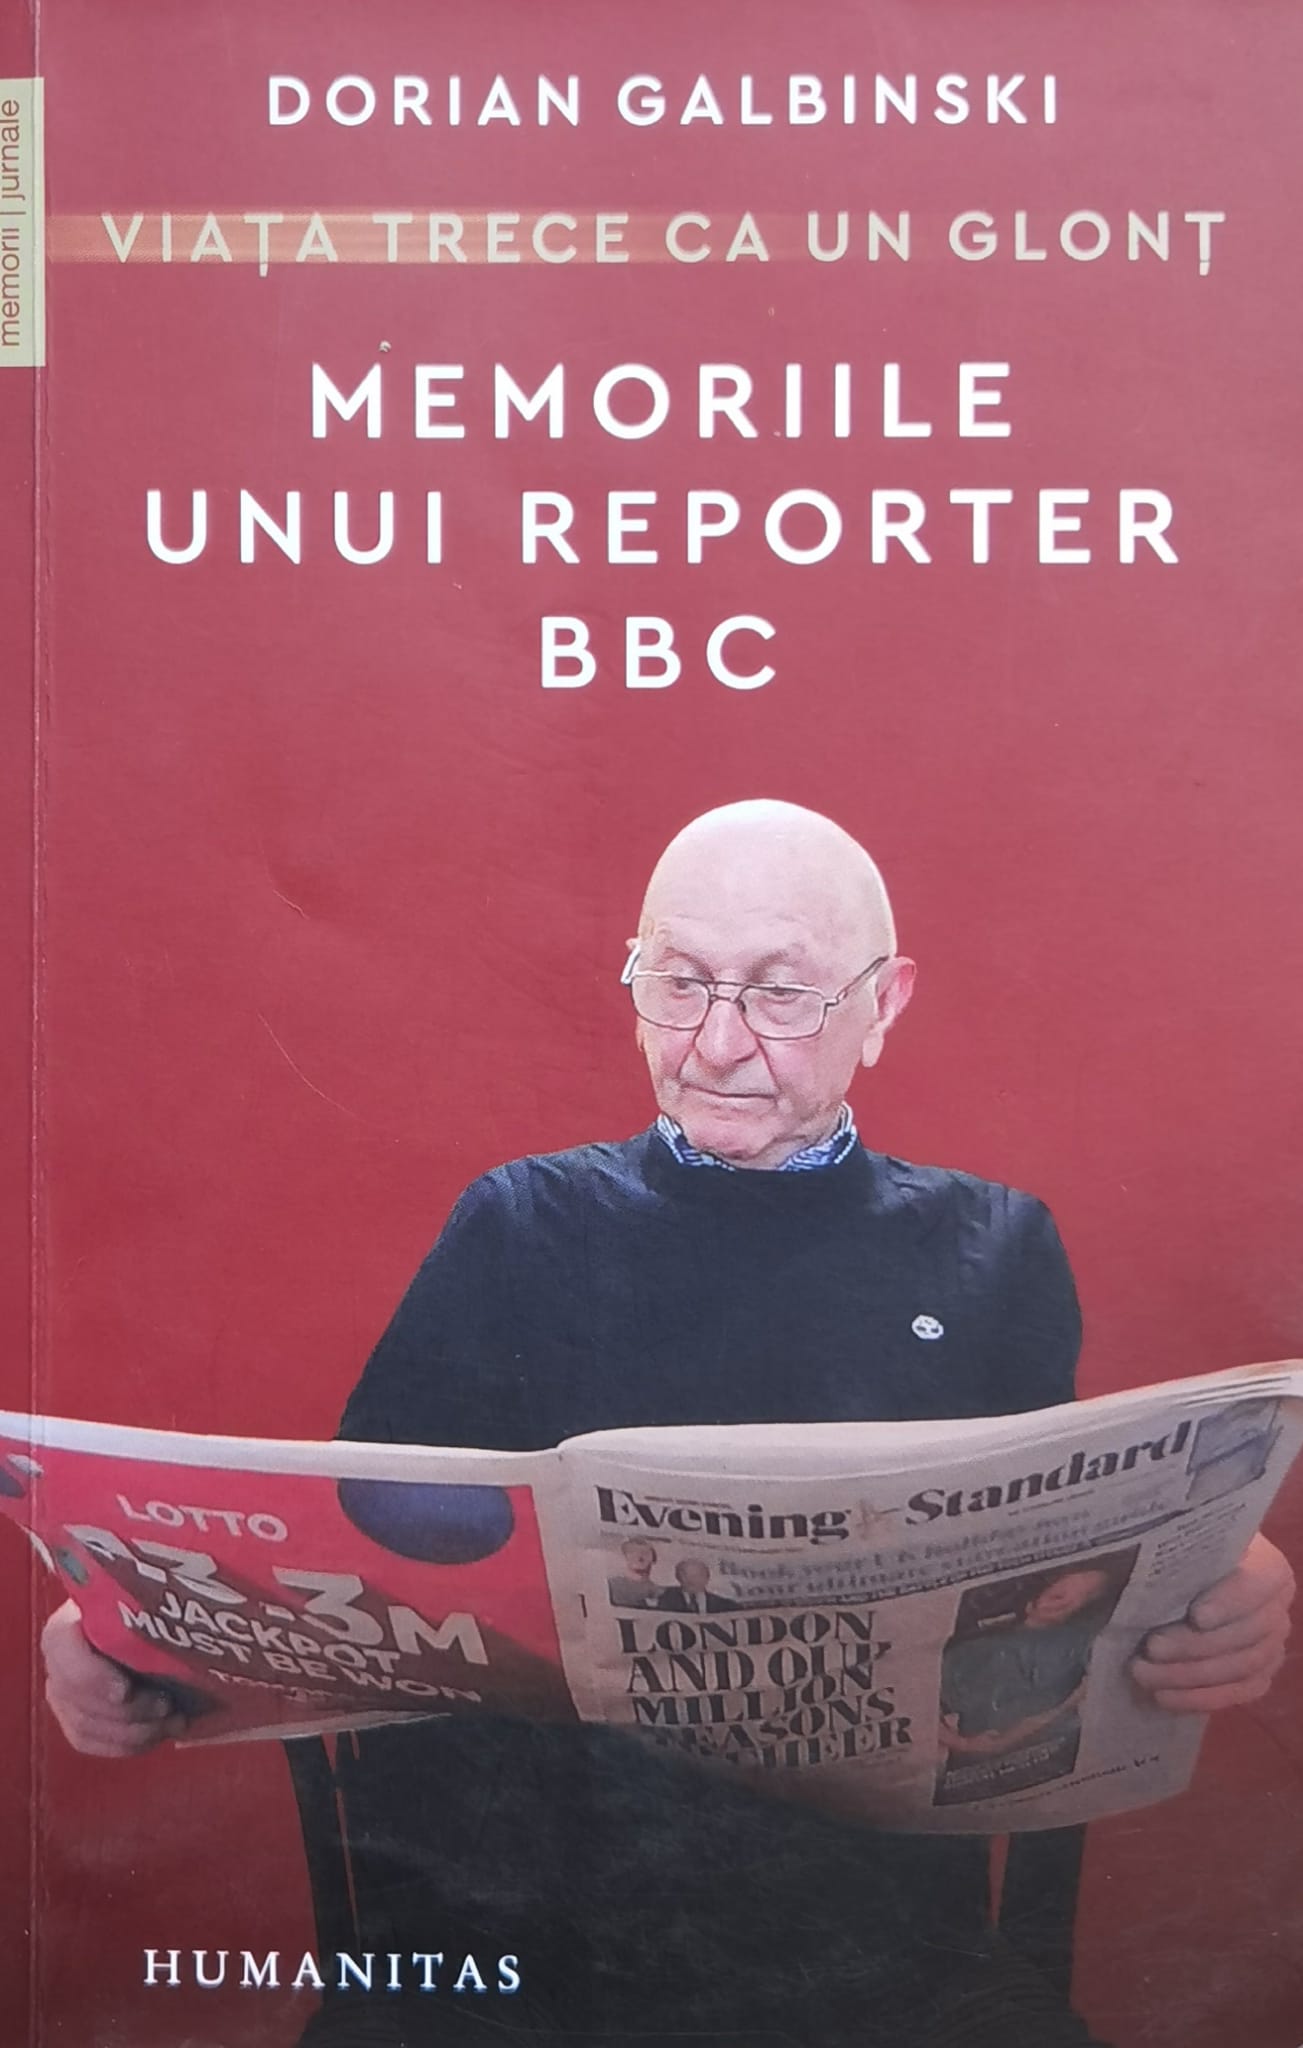 memoriile unui reporter bbc. viata trece ca un glont                                                 dorian galbinski                                                                                    